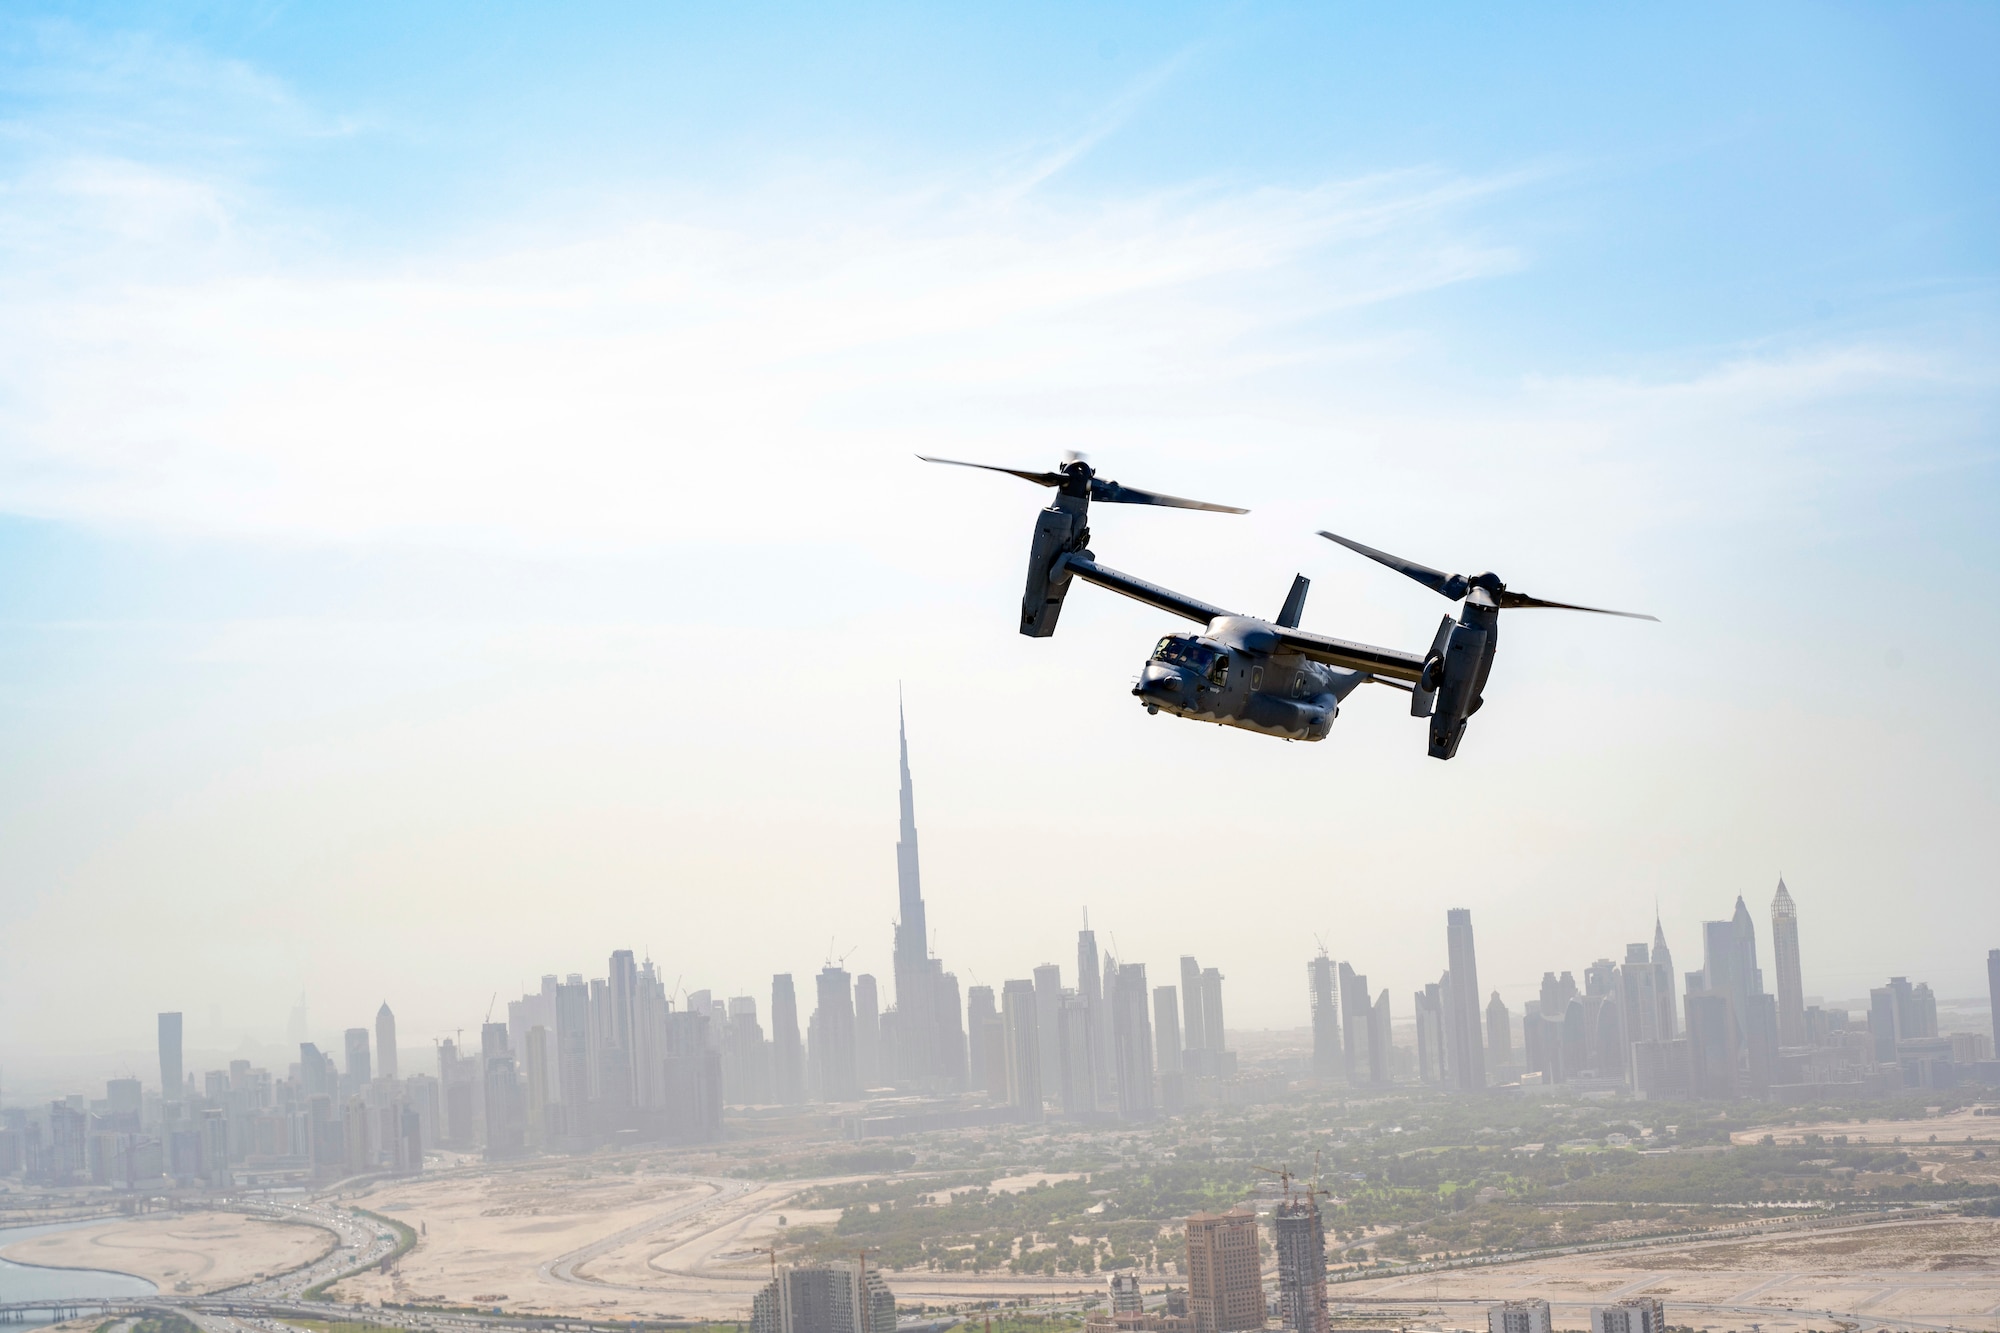 Osprey flight around the United Arab Emirates